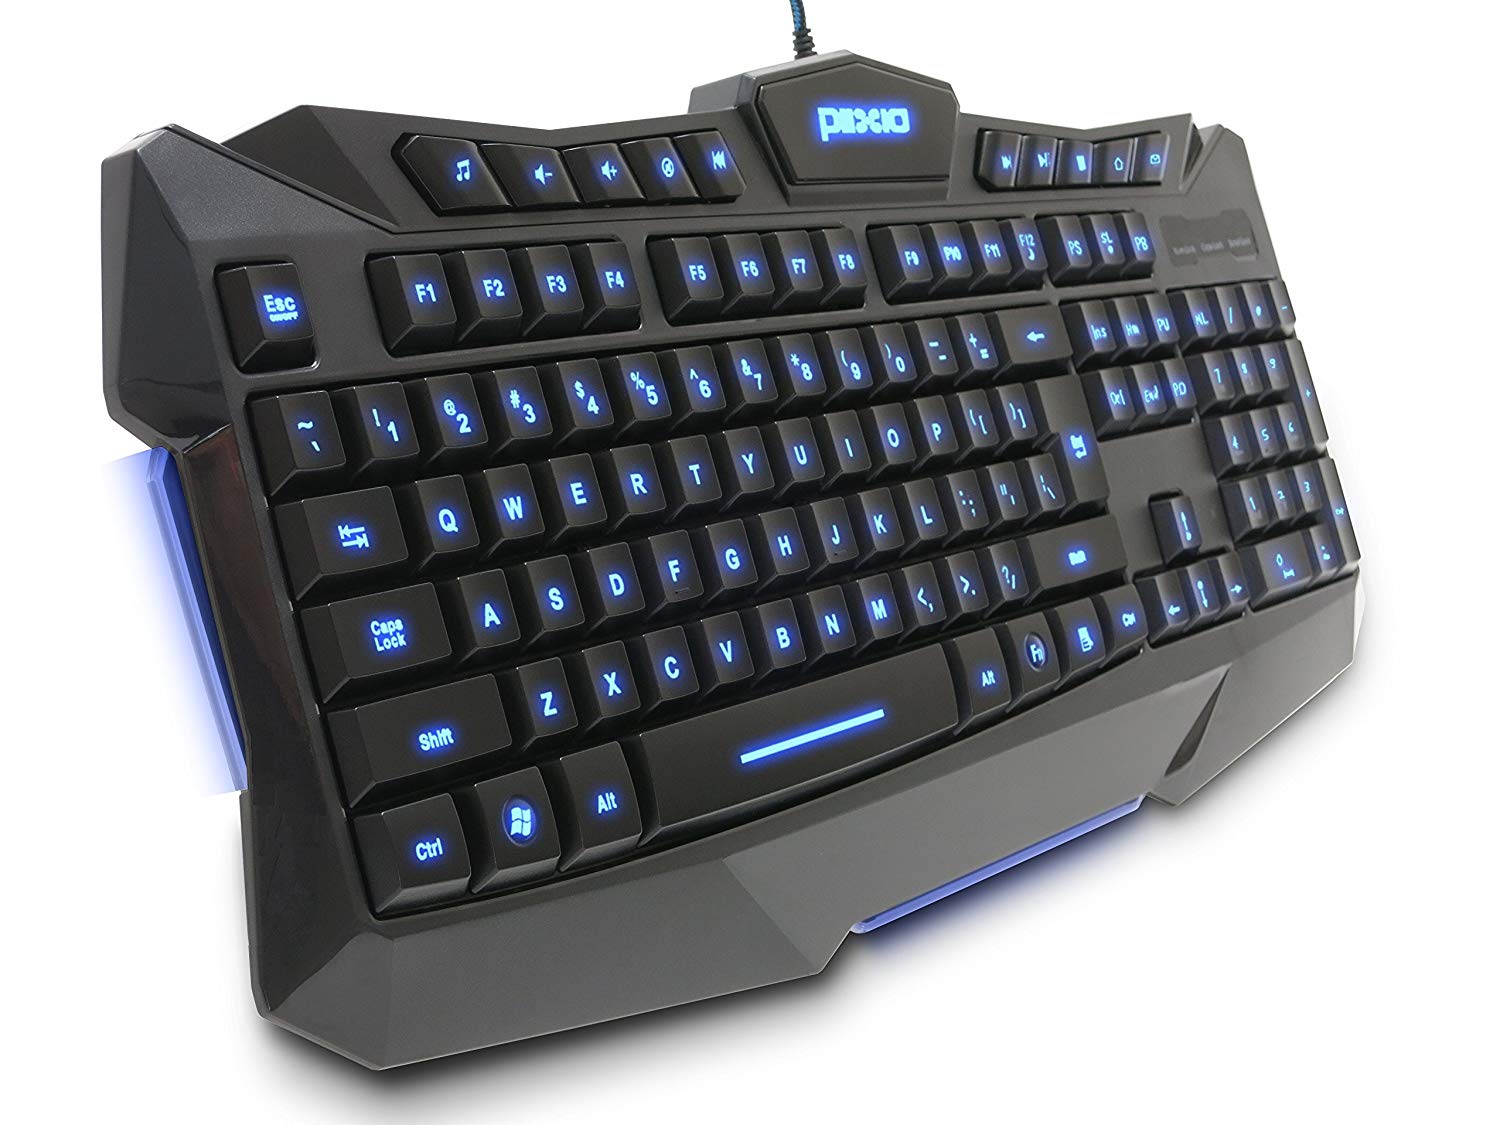 asus computer light up keyboard